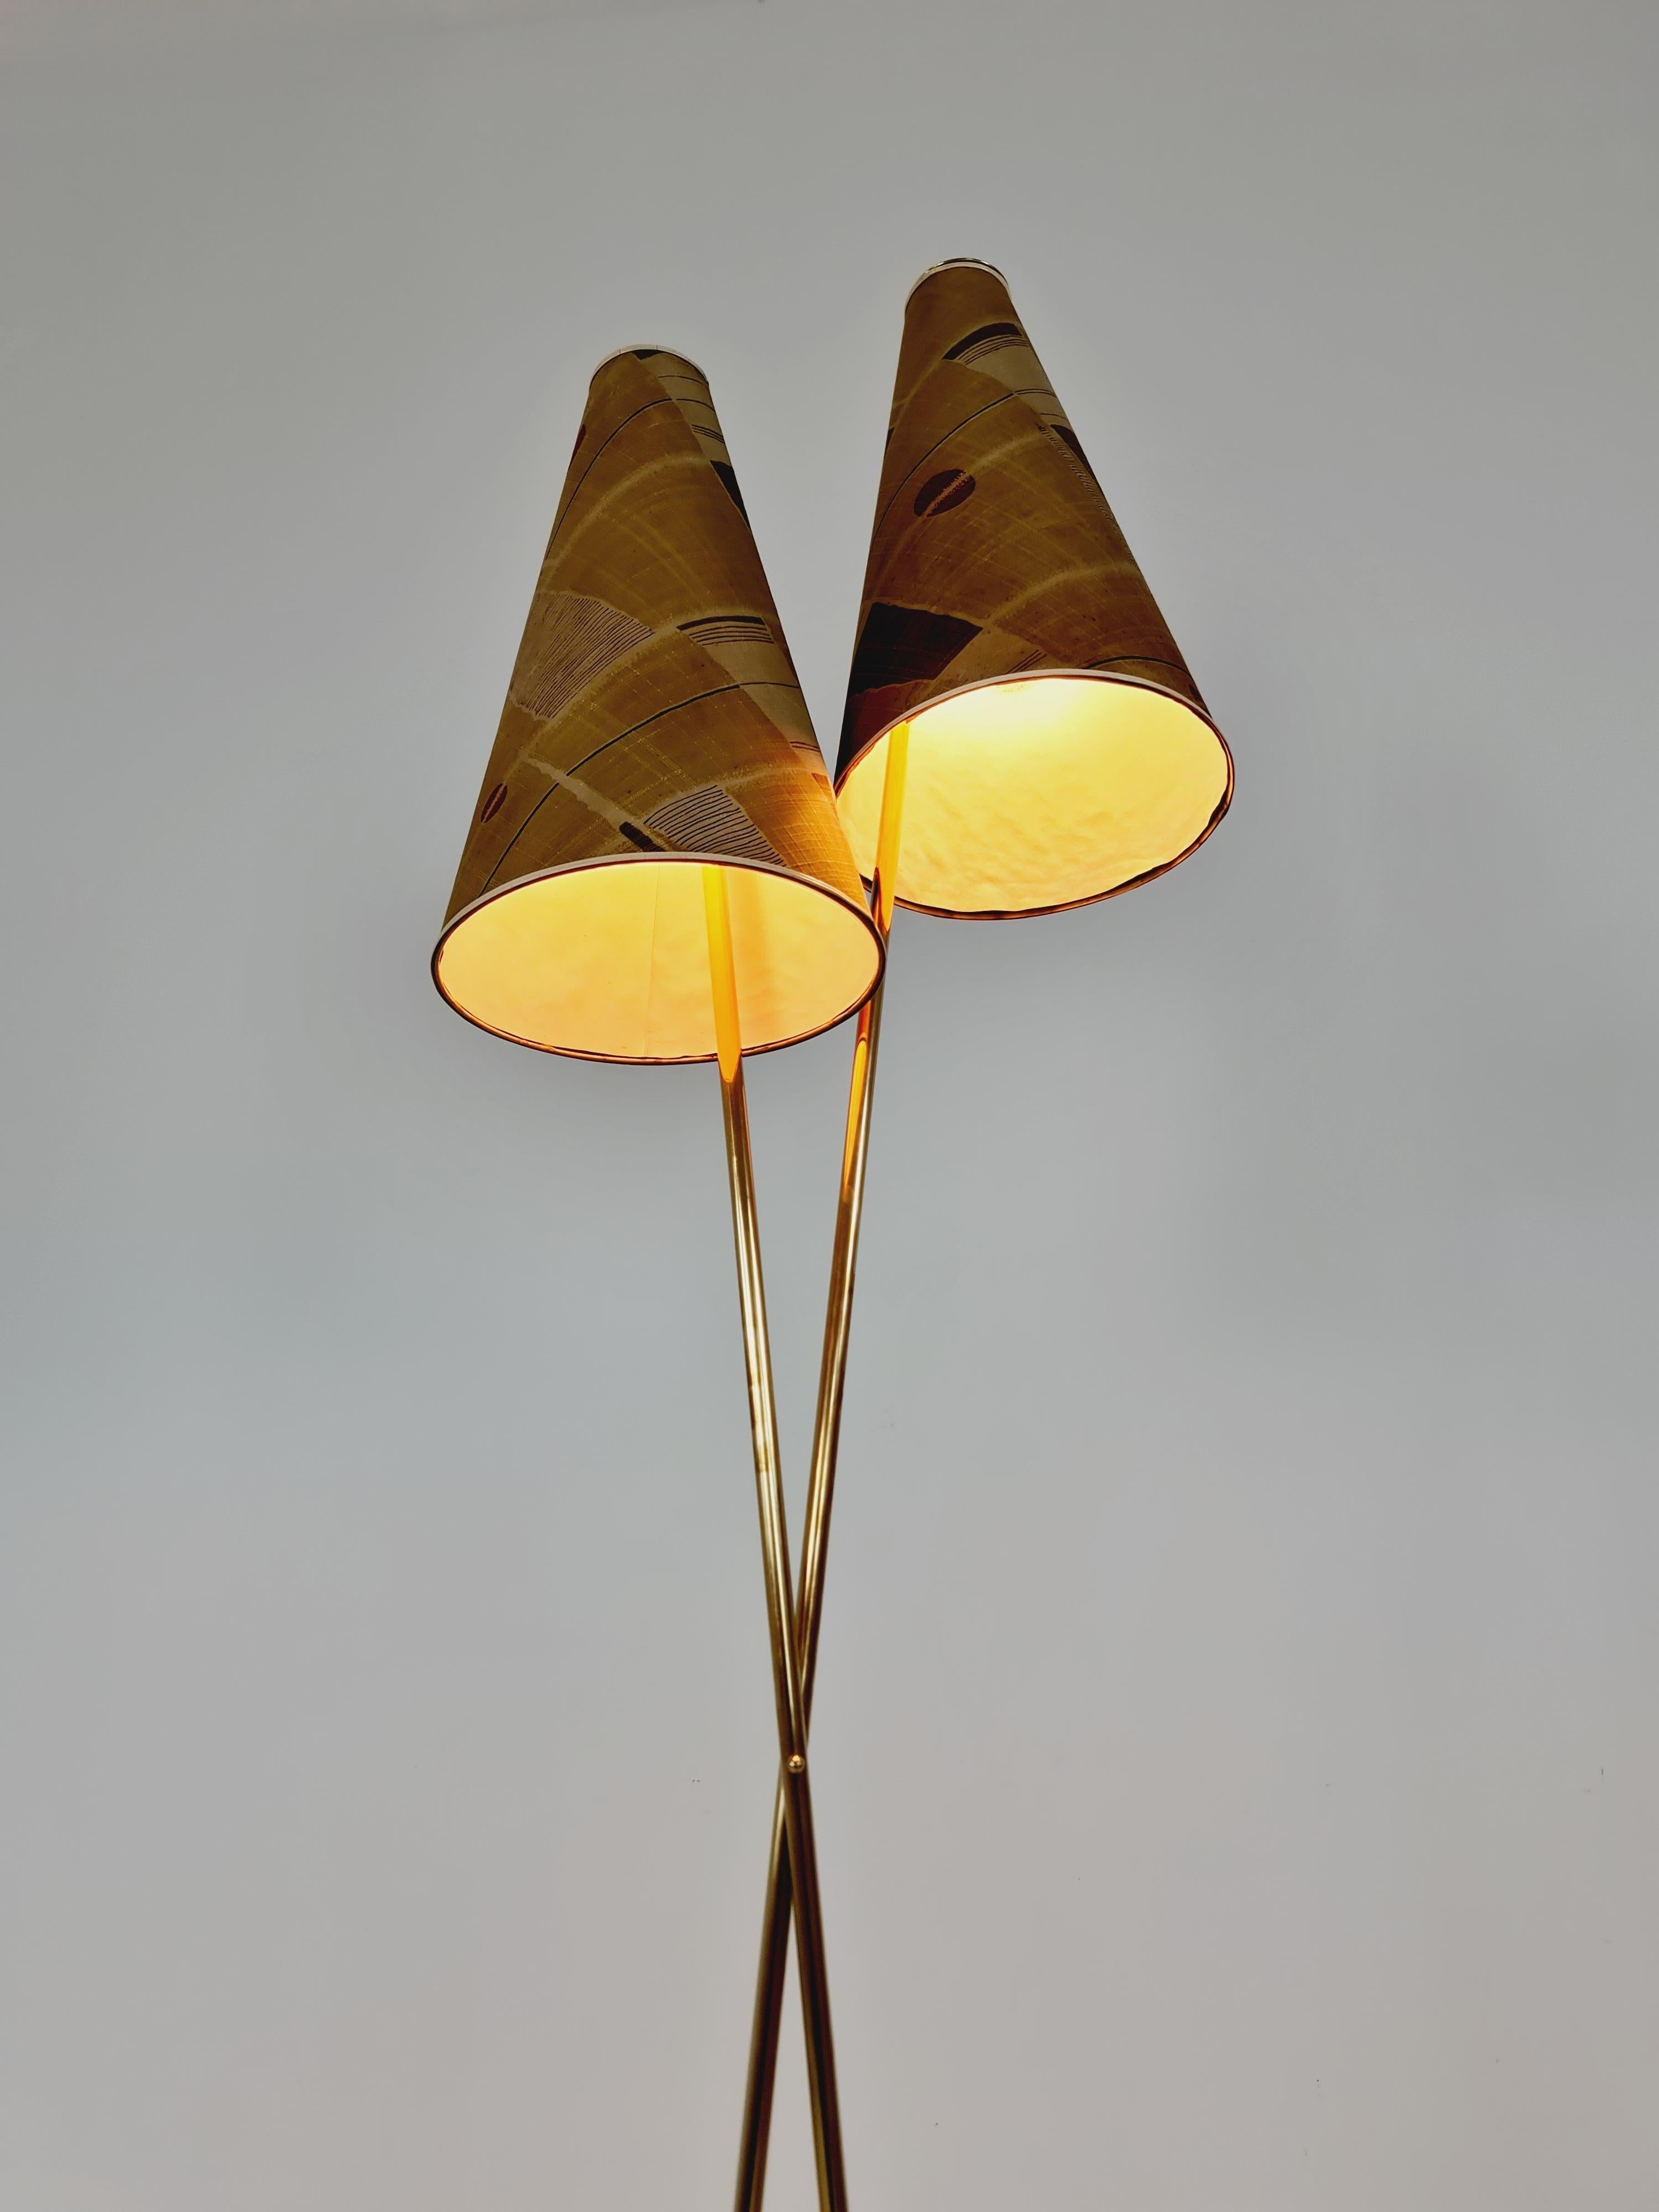 EXTREME RARE brass 1950s vintage floor lamp / bag lamp mcm For Sale 2